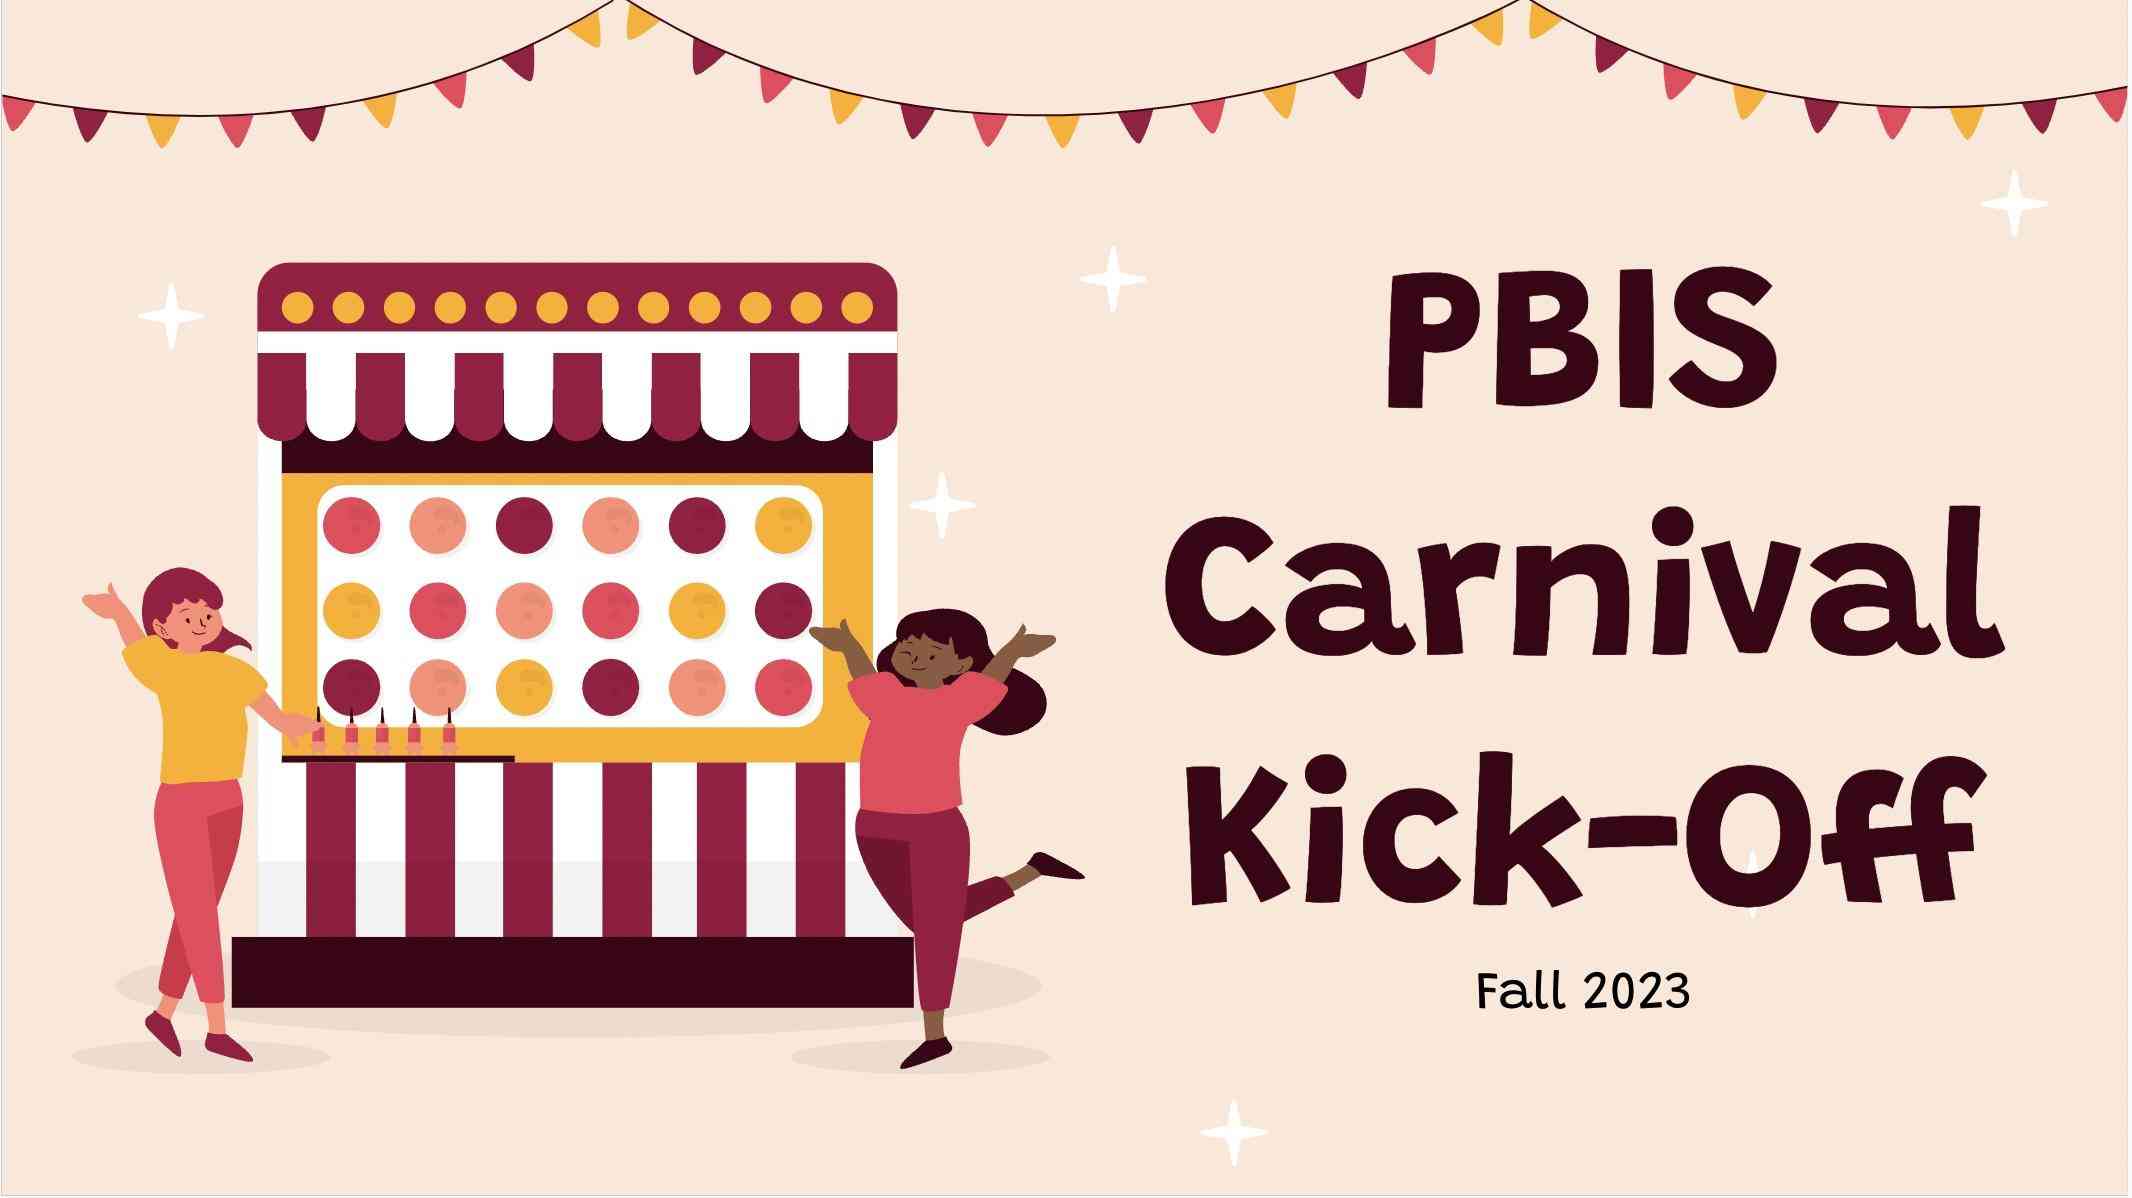 PBIS Carnival Kick-Off Image